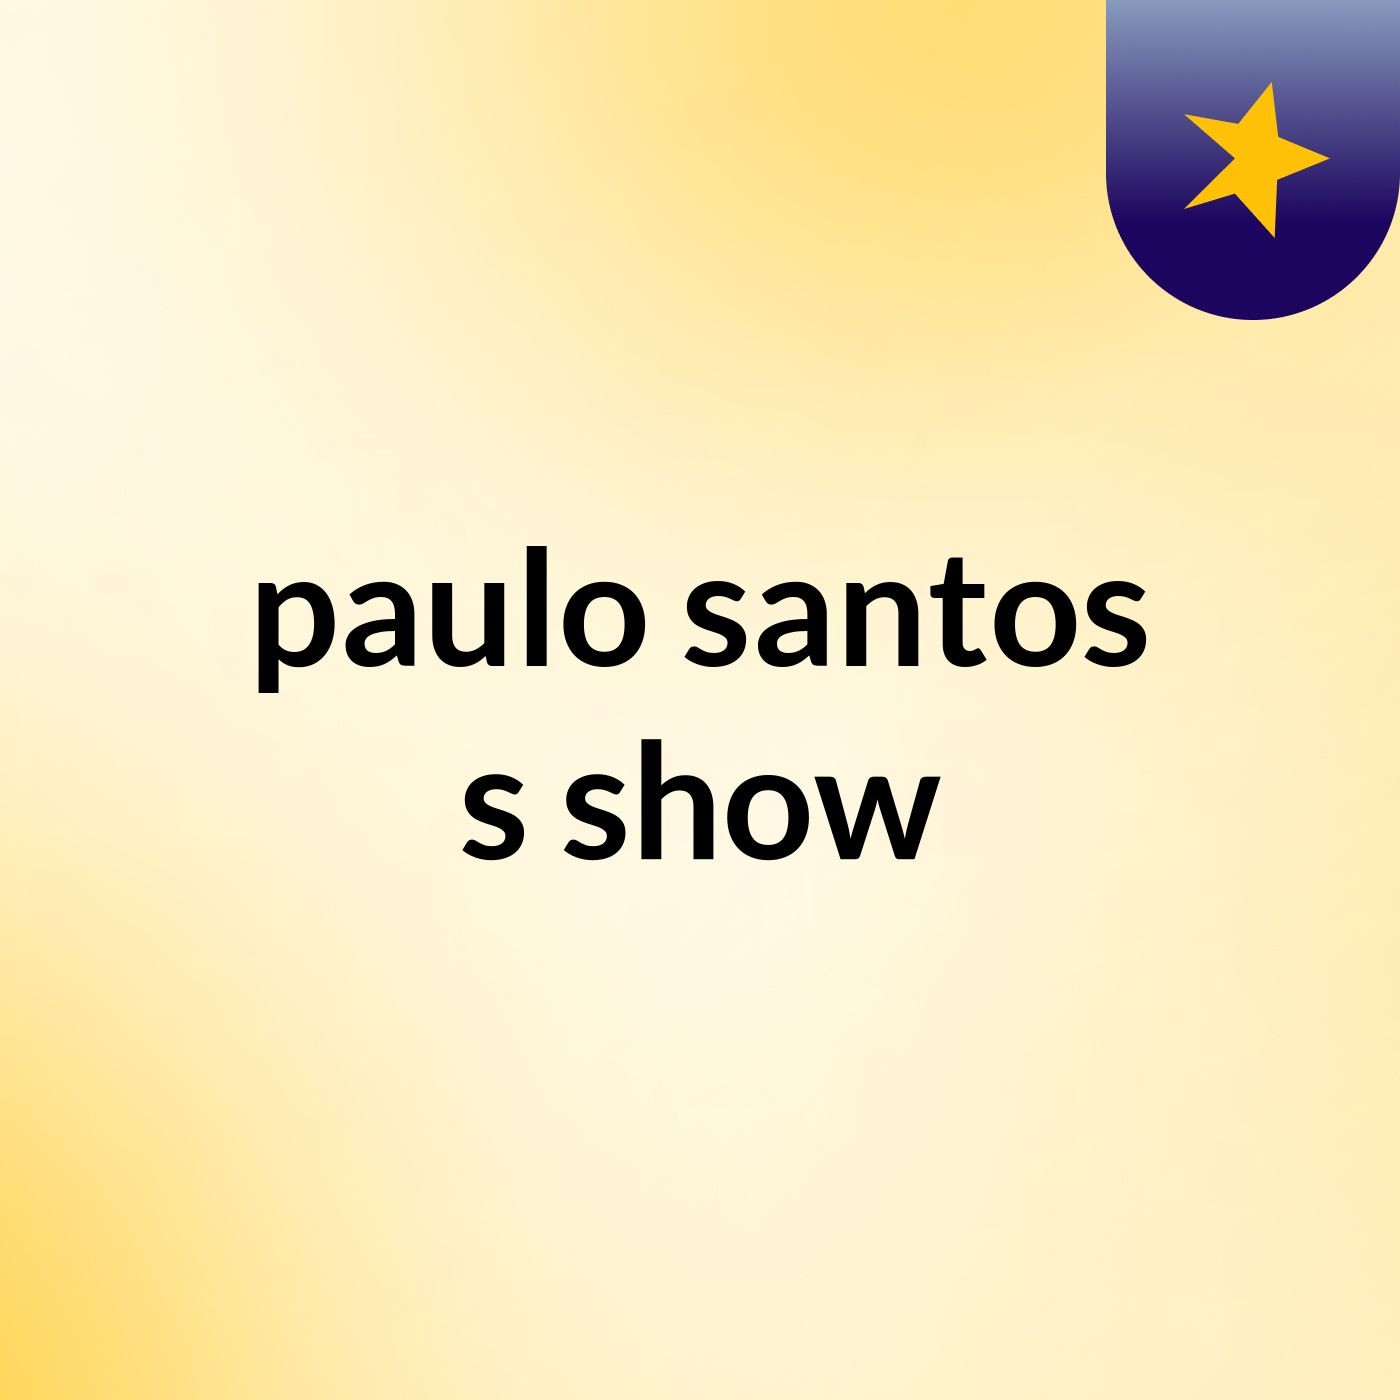 paulo santos's show